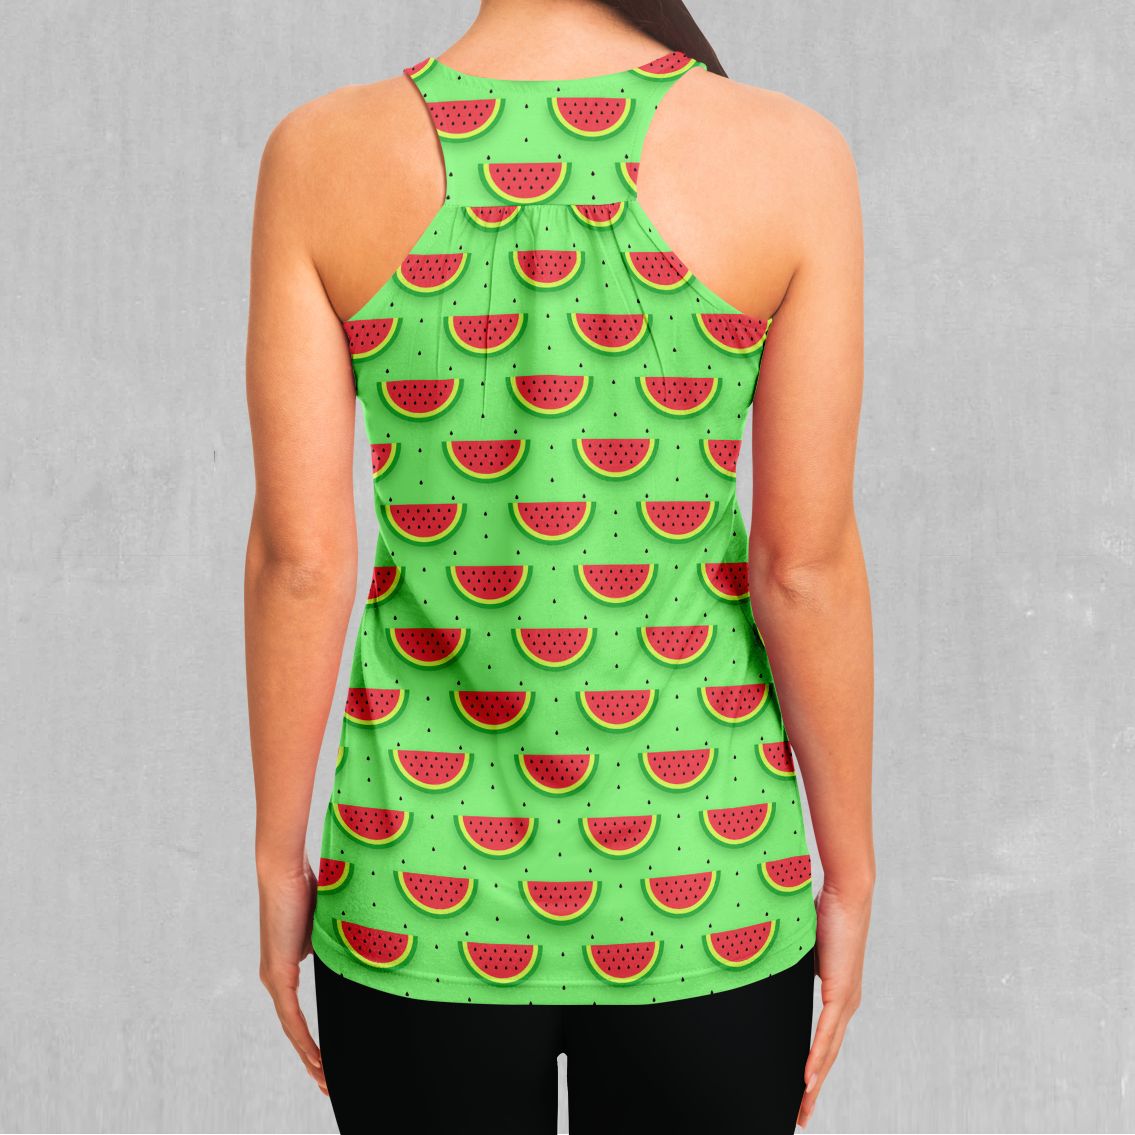 Women's tank top Darika Watermelons Grey Thailand